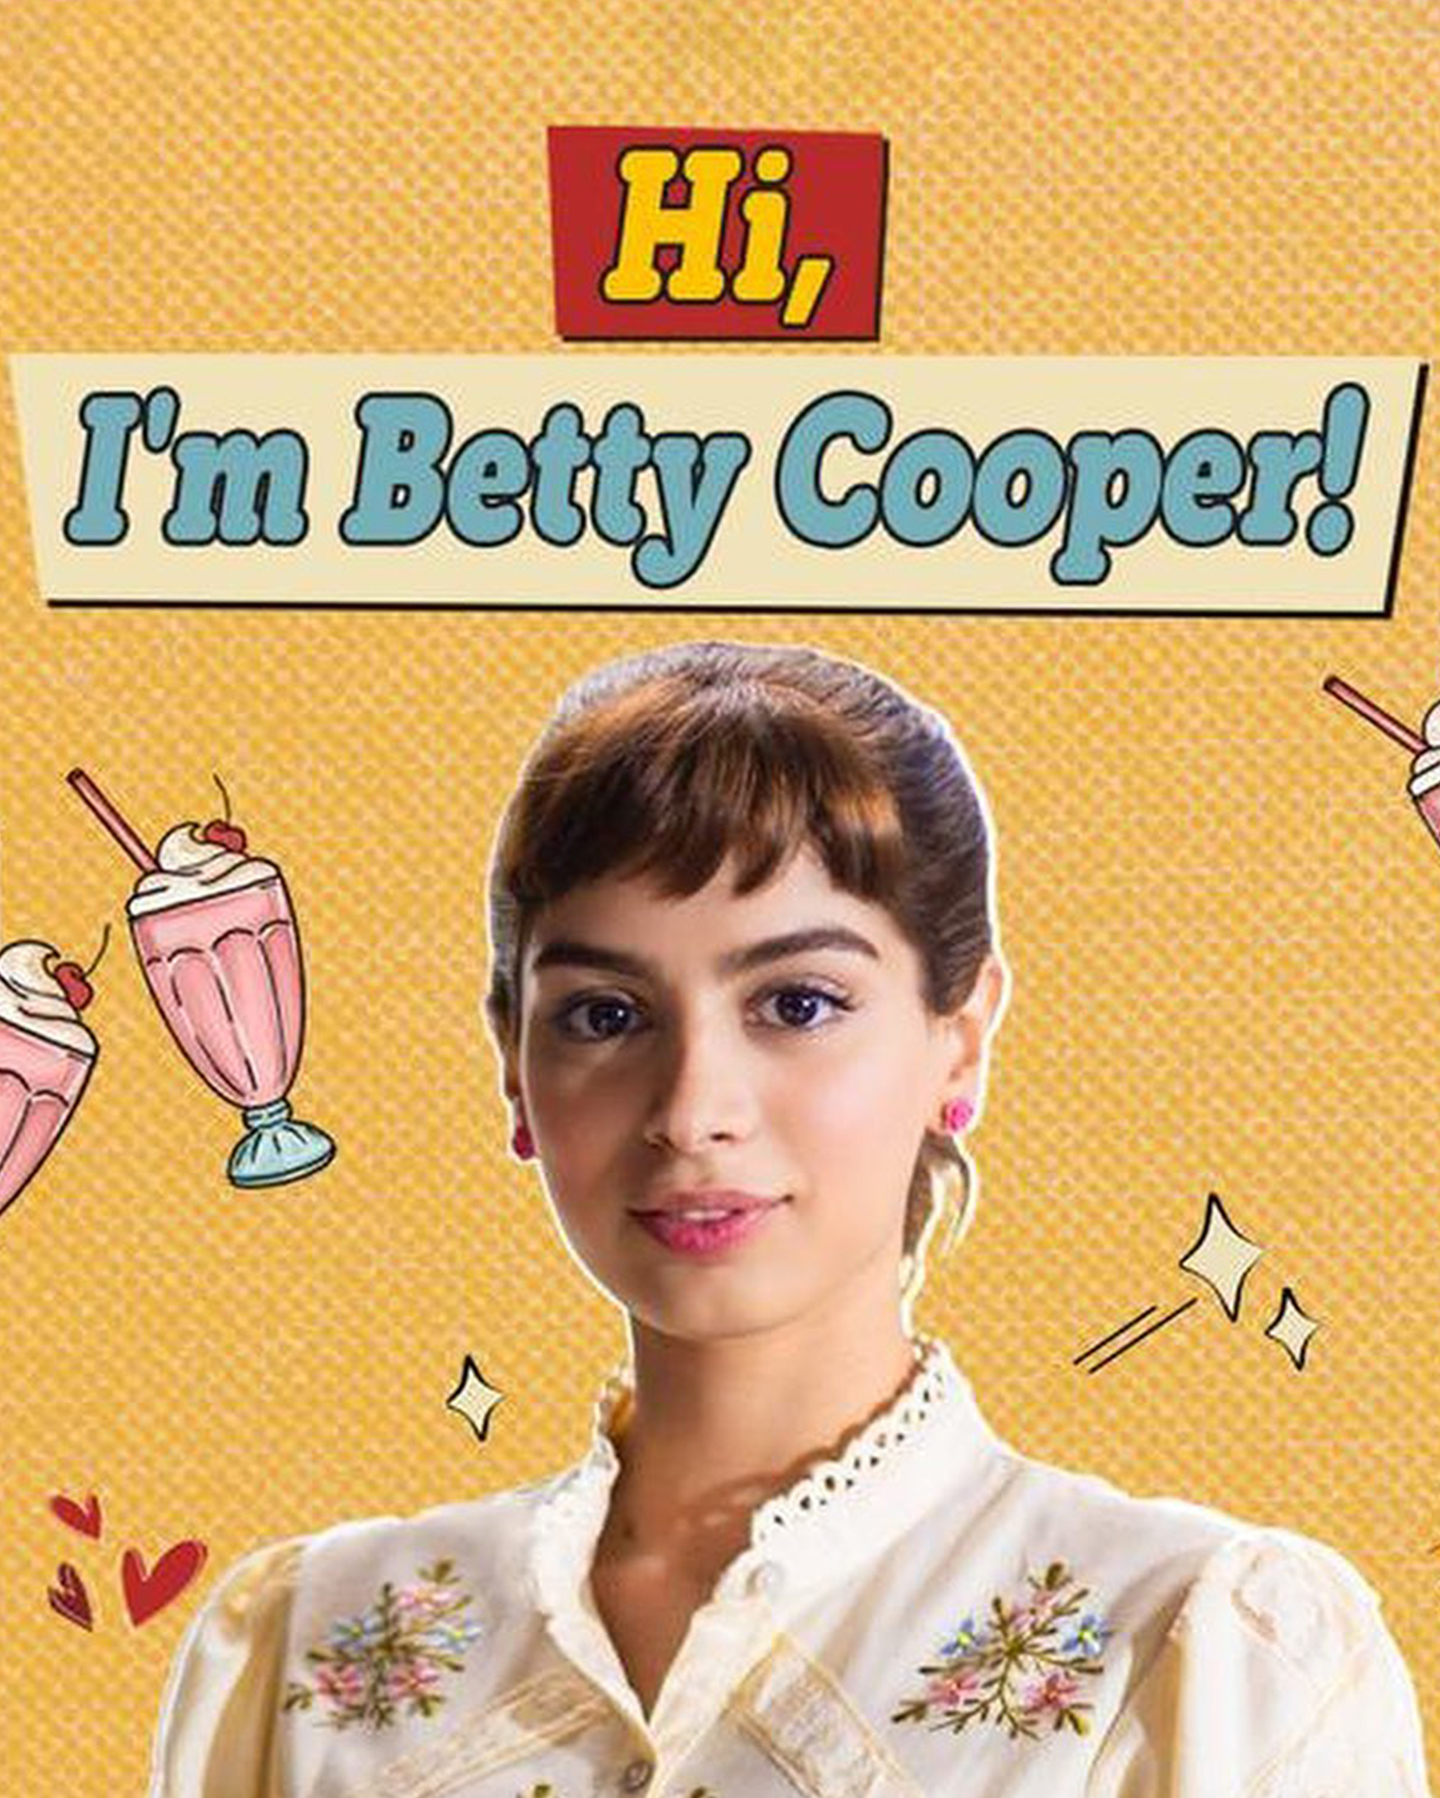 Khushi Kapoor plays Betty Cooper